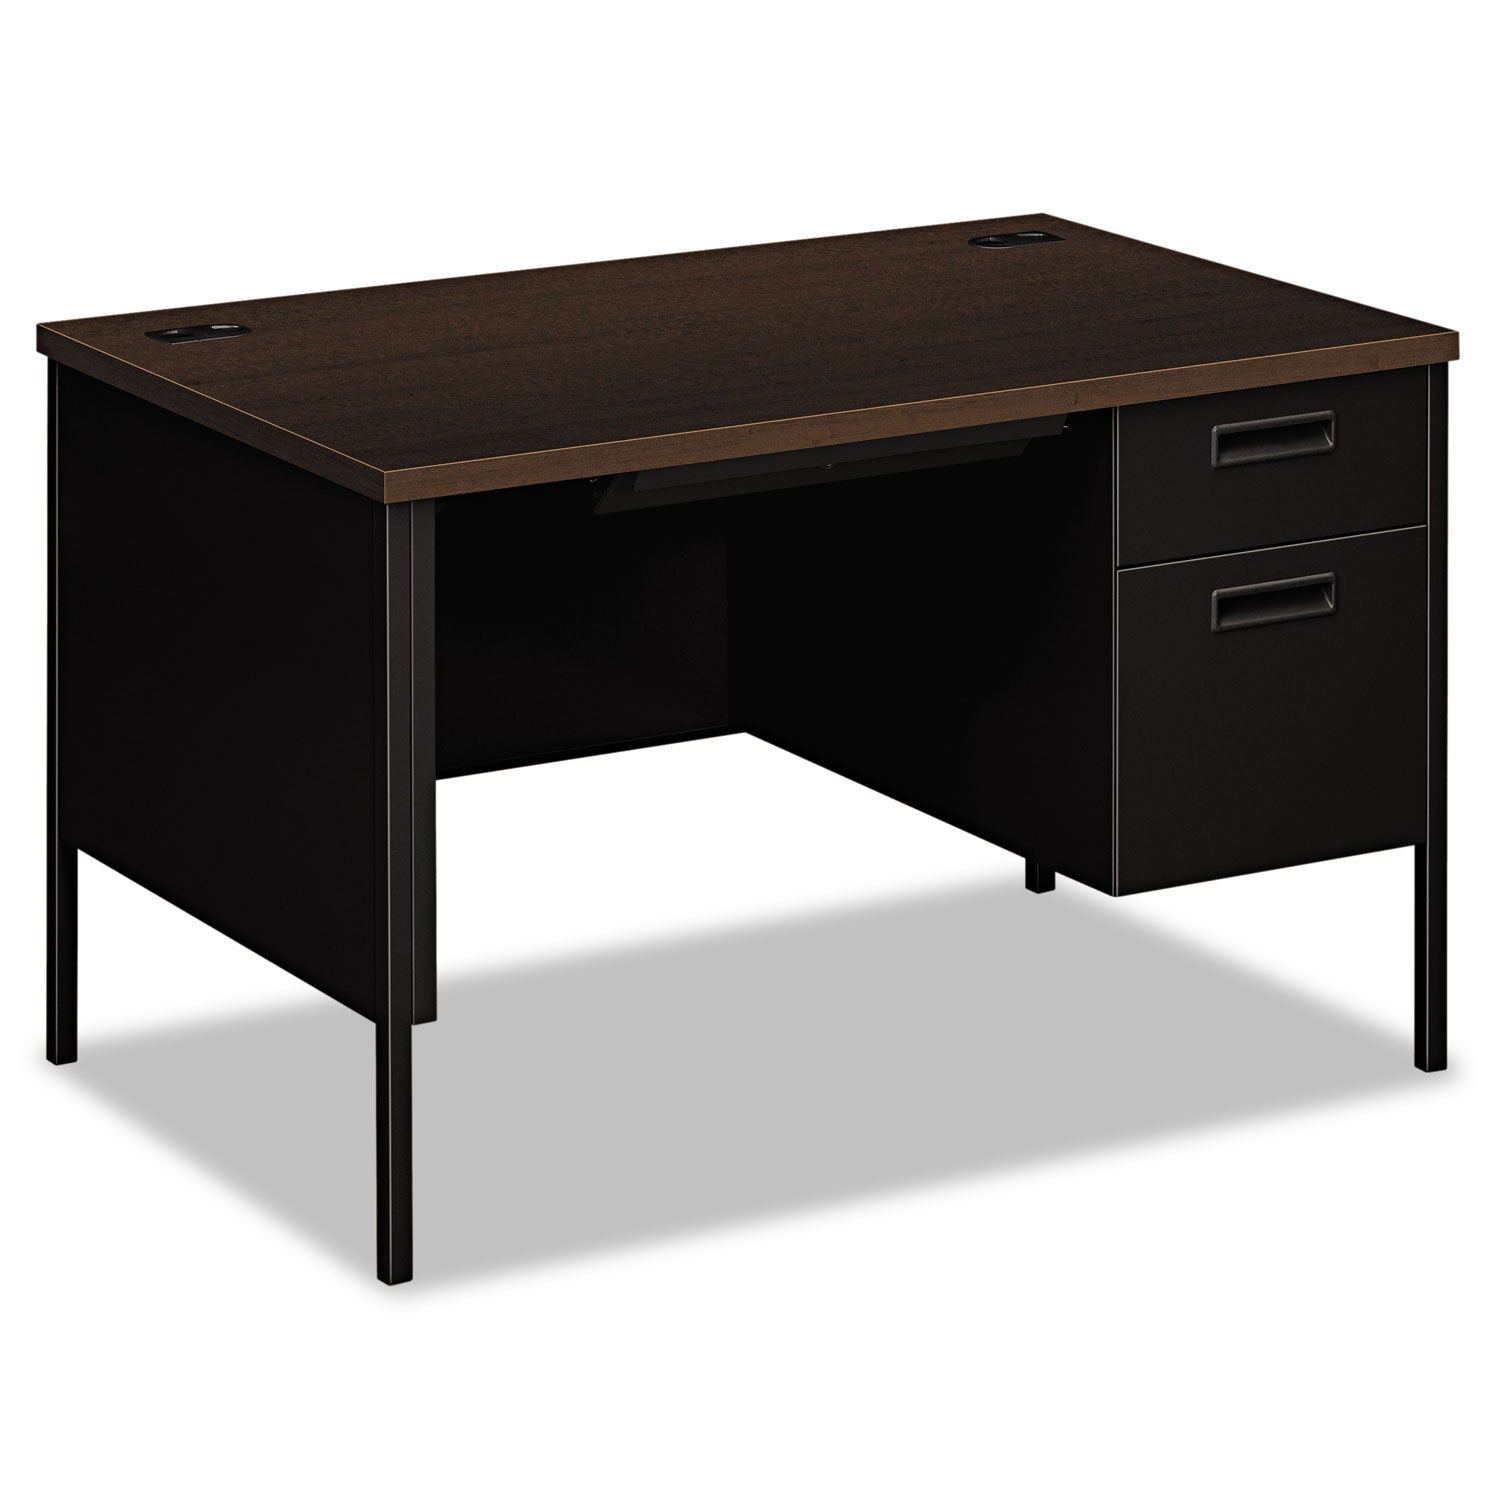 Metro Classic Series Right Pedestal Desk, 48" x 30" x 29.5", Mocha/Black - 